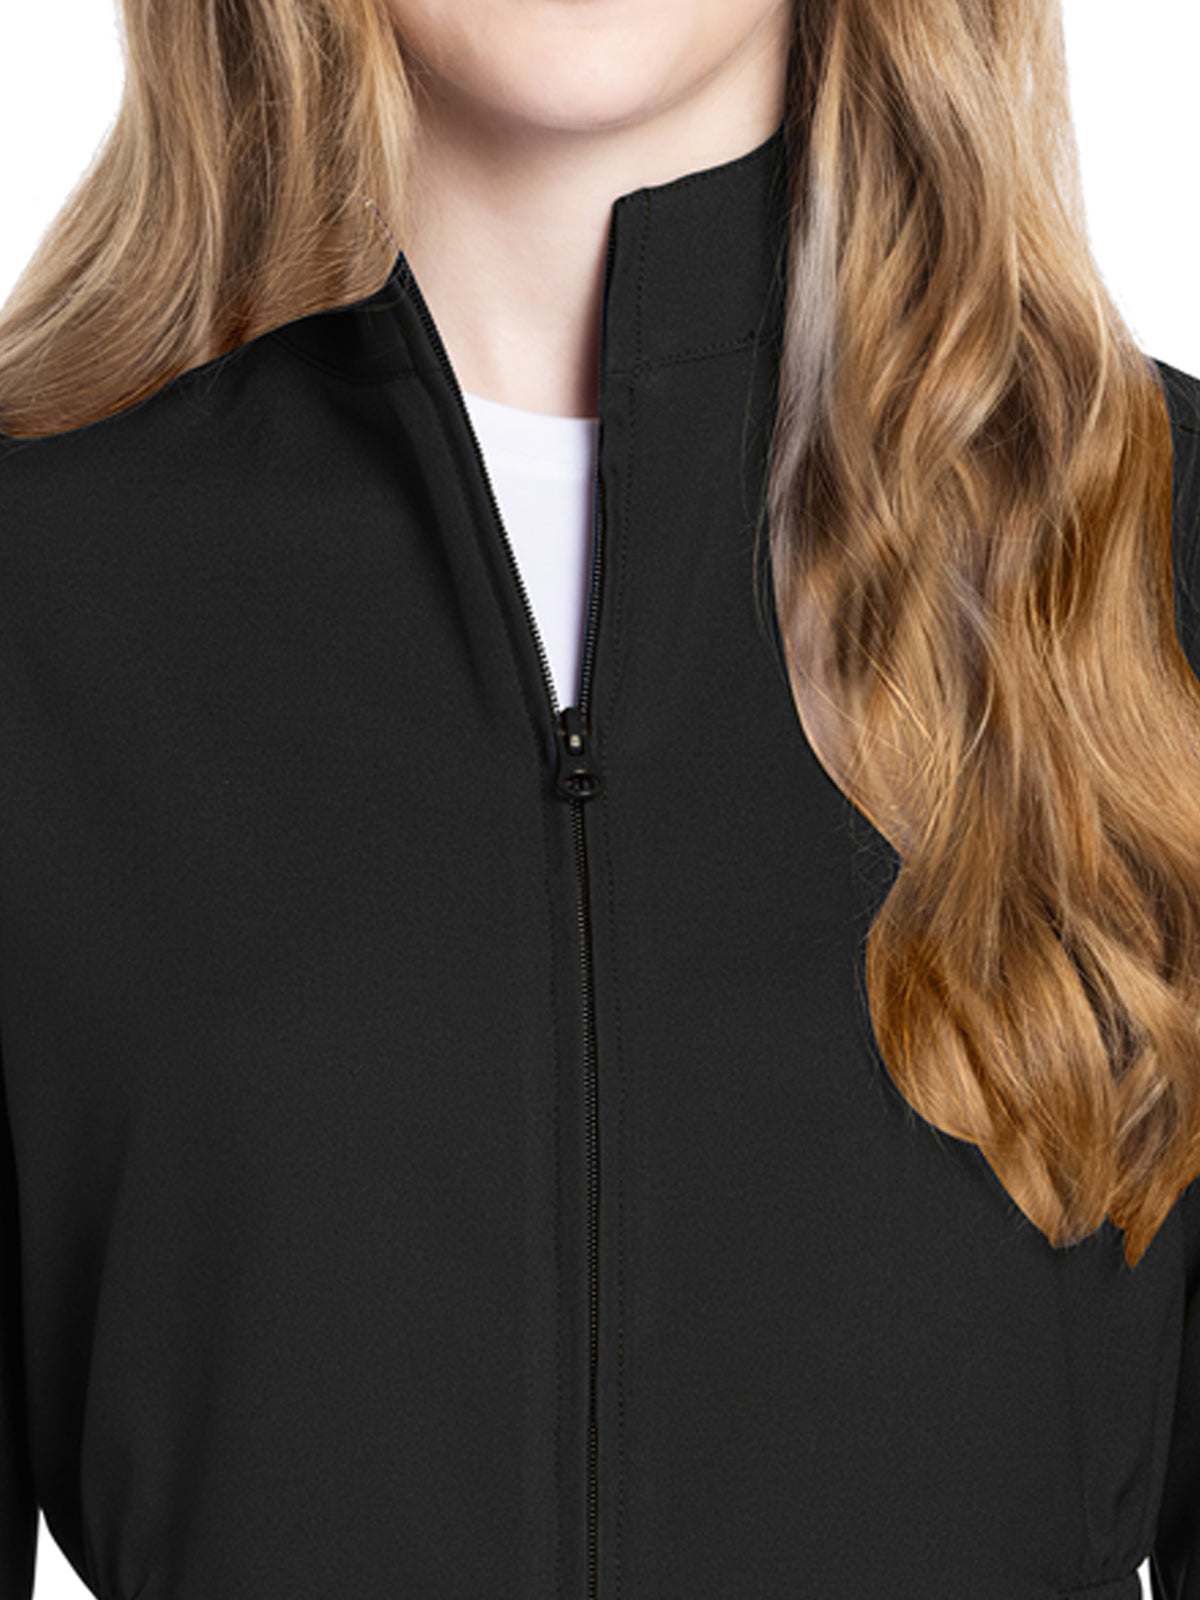 Women's 2-Pocket Zip Front Jacket - CK391A - Black